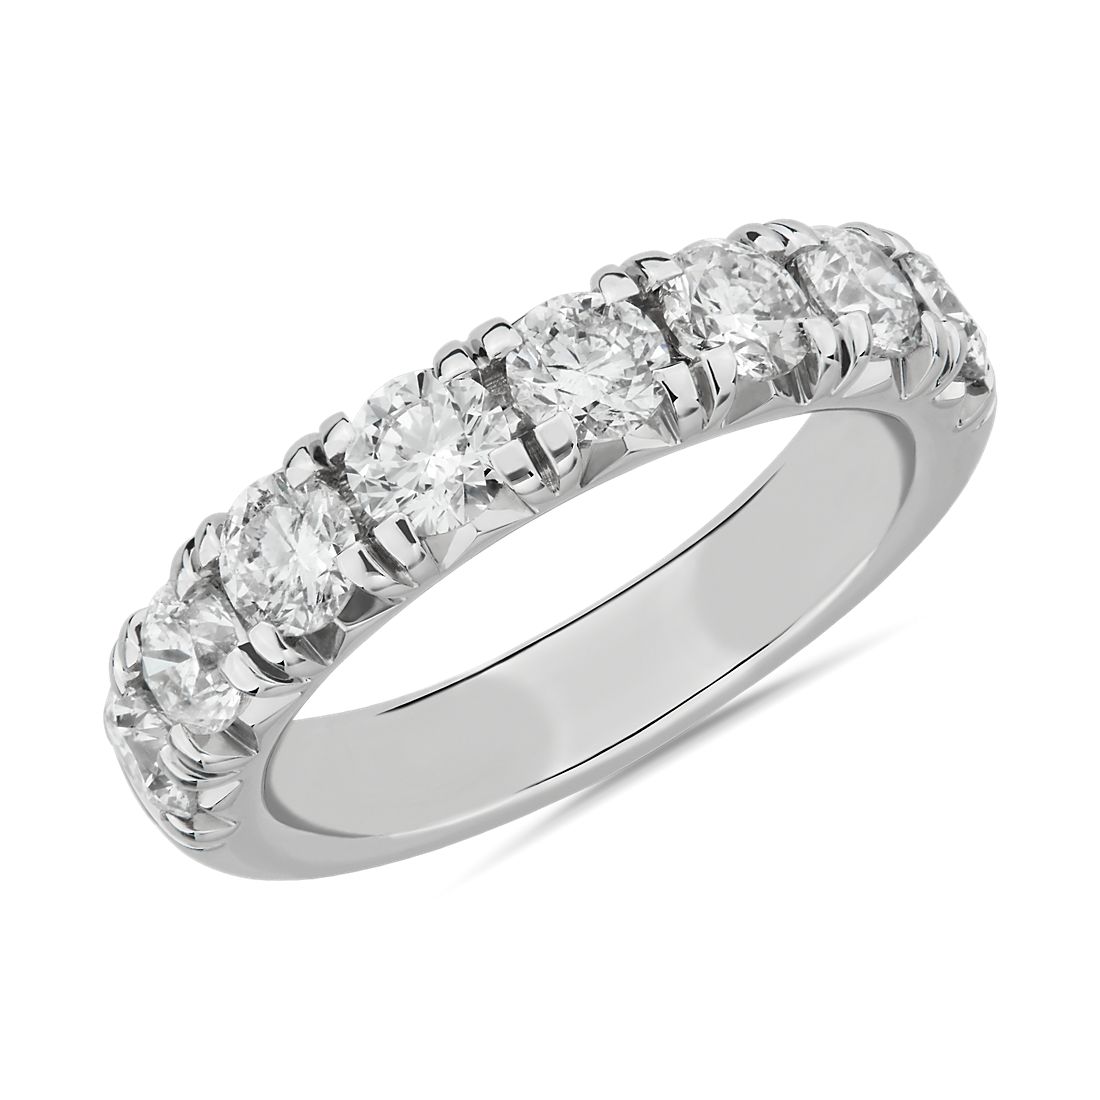 French Pavé Diamond Ring in Platinum (1.96 ct. tw.)